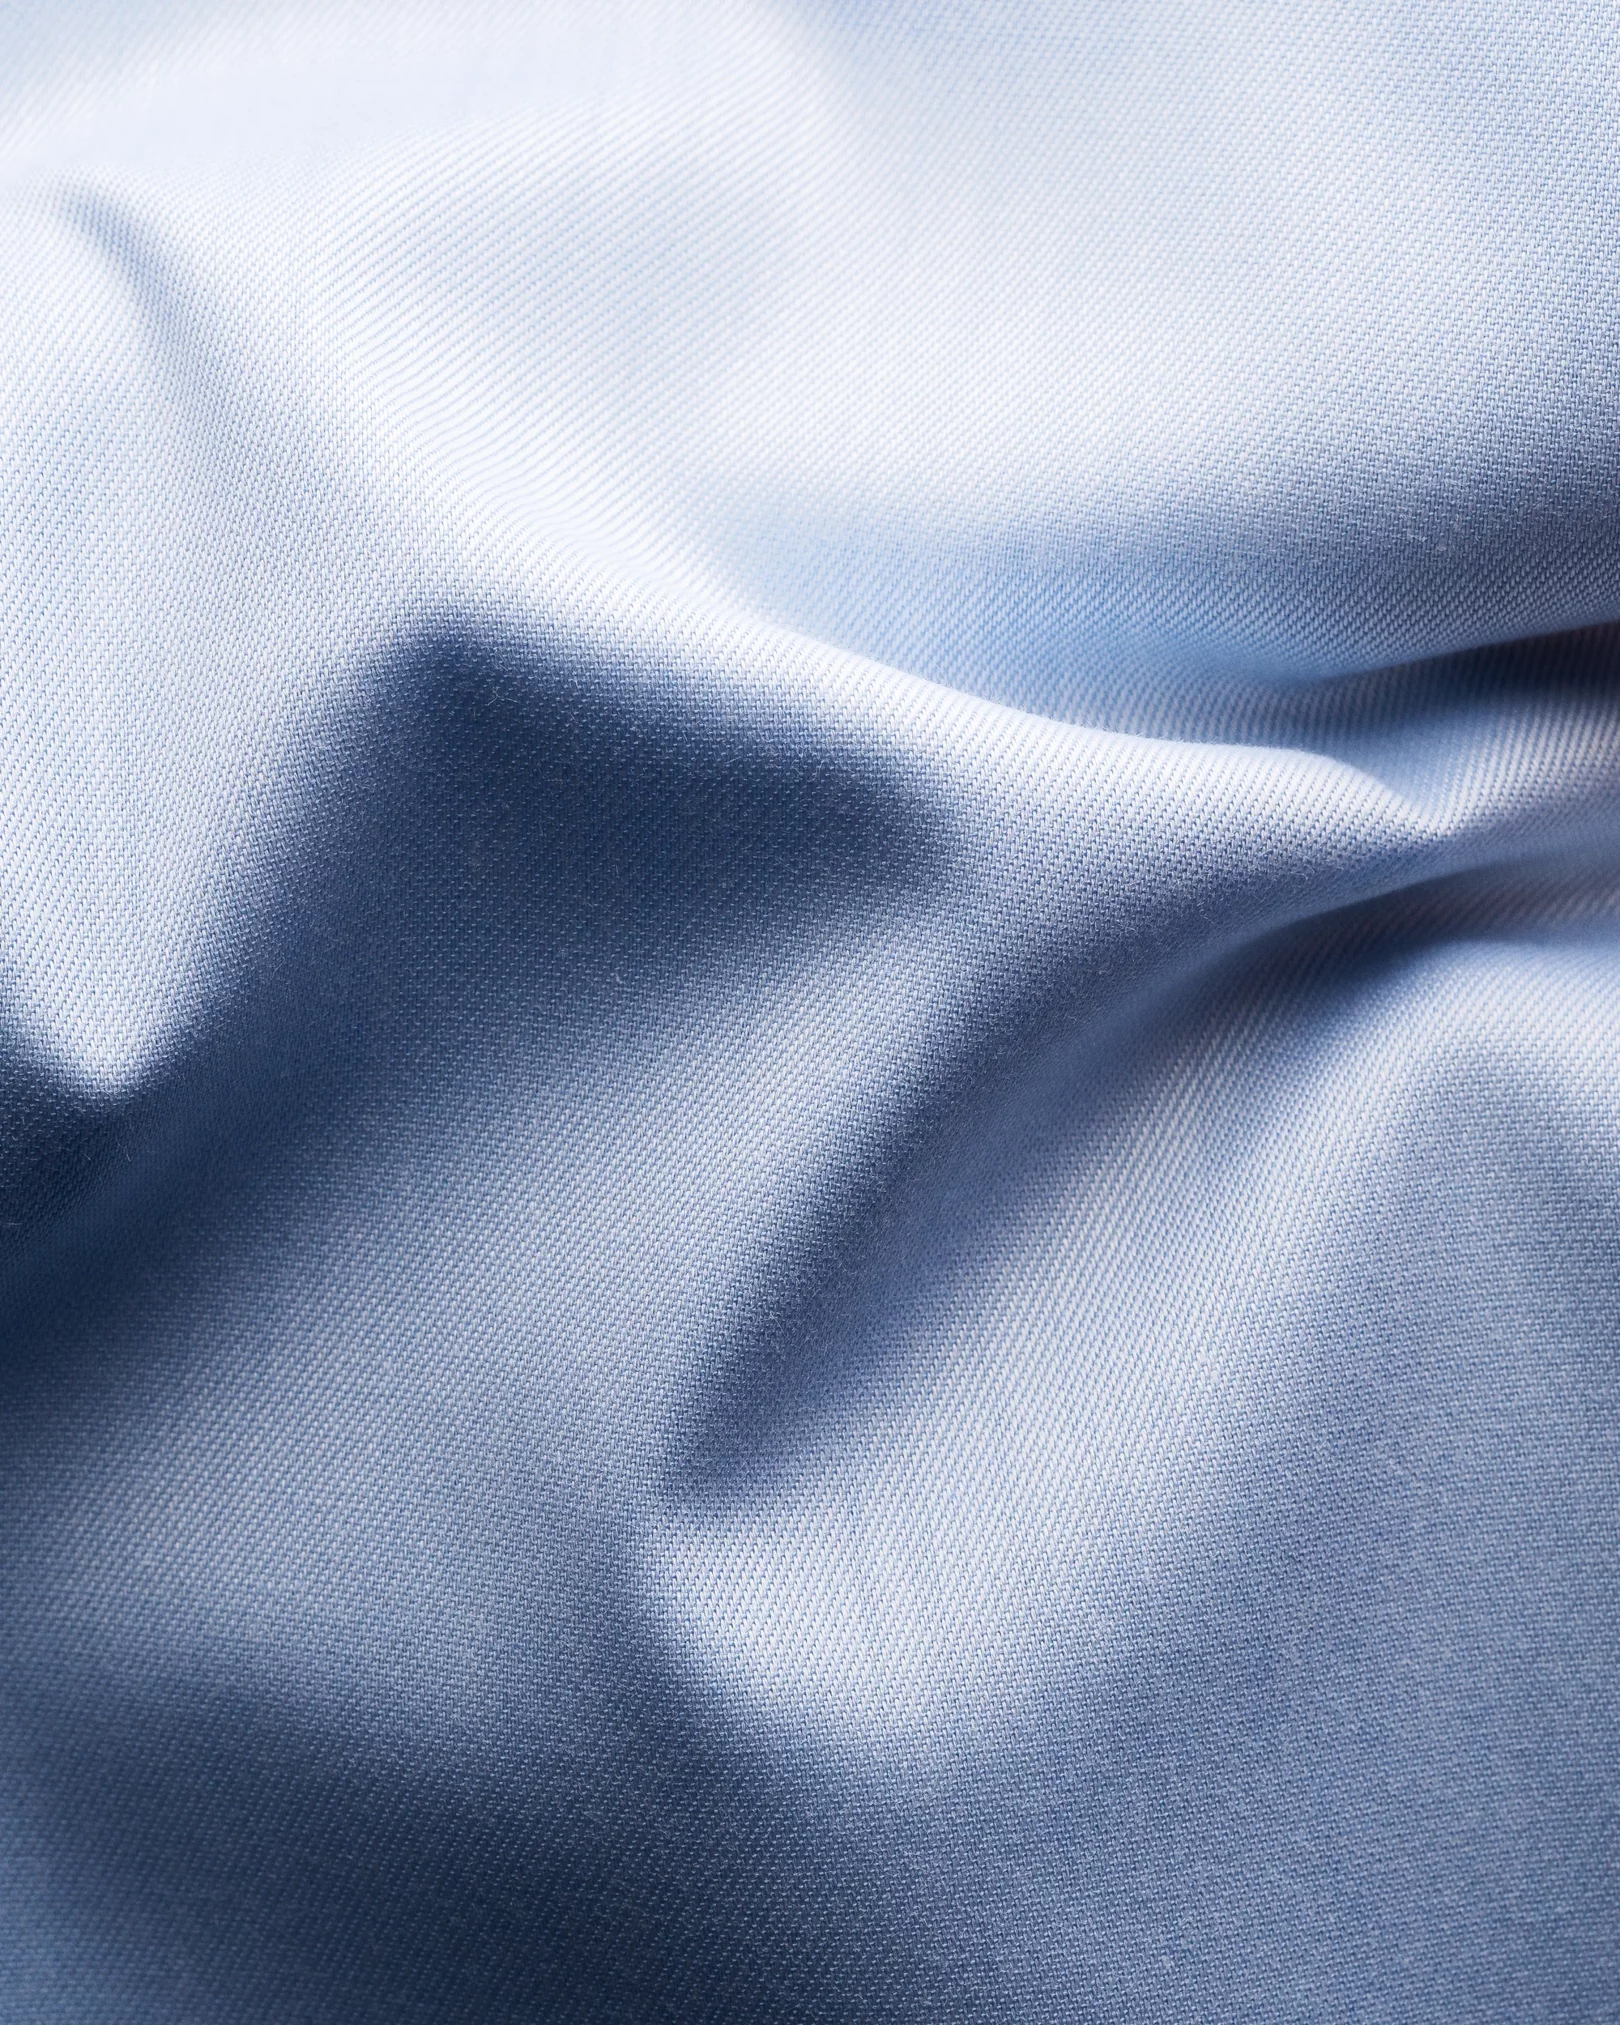 Eton - Light Blue Signature Twill Shirt - Floral Contrast Details